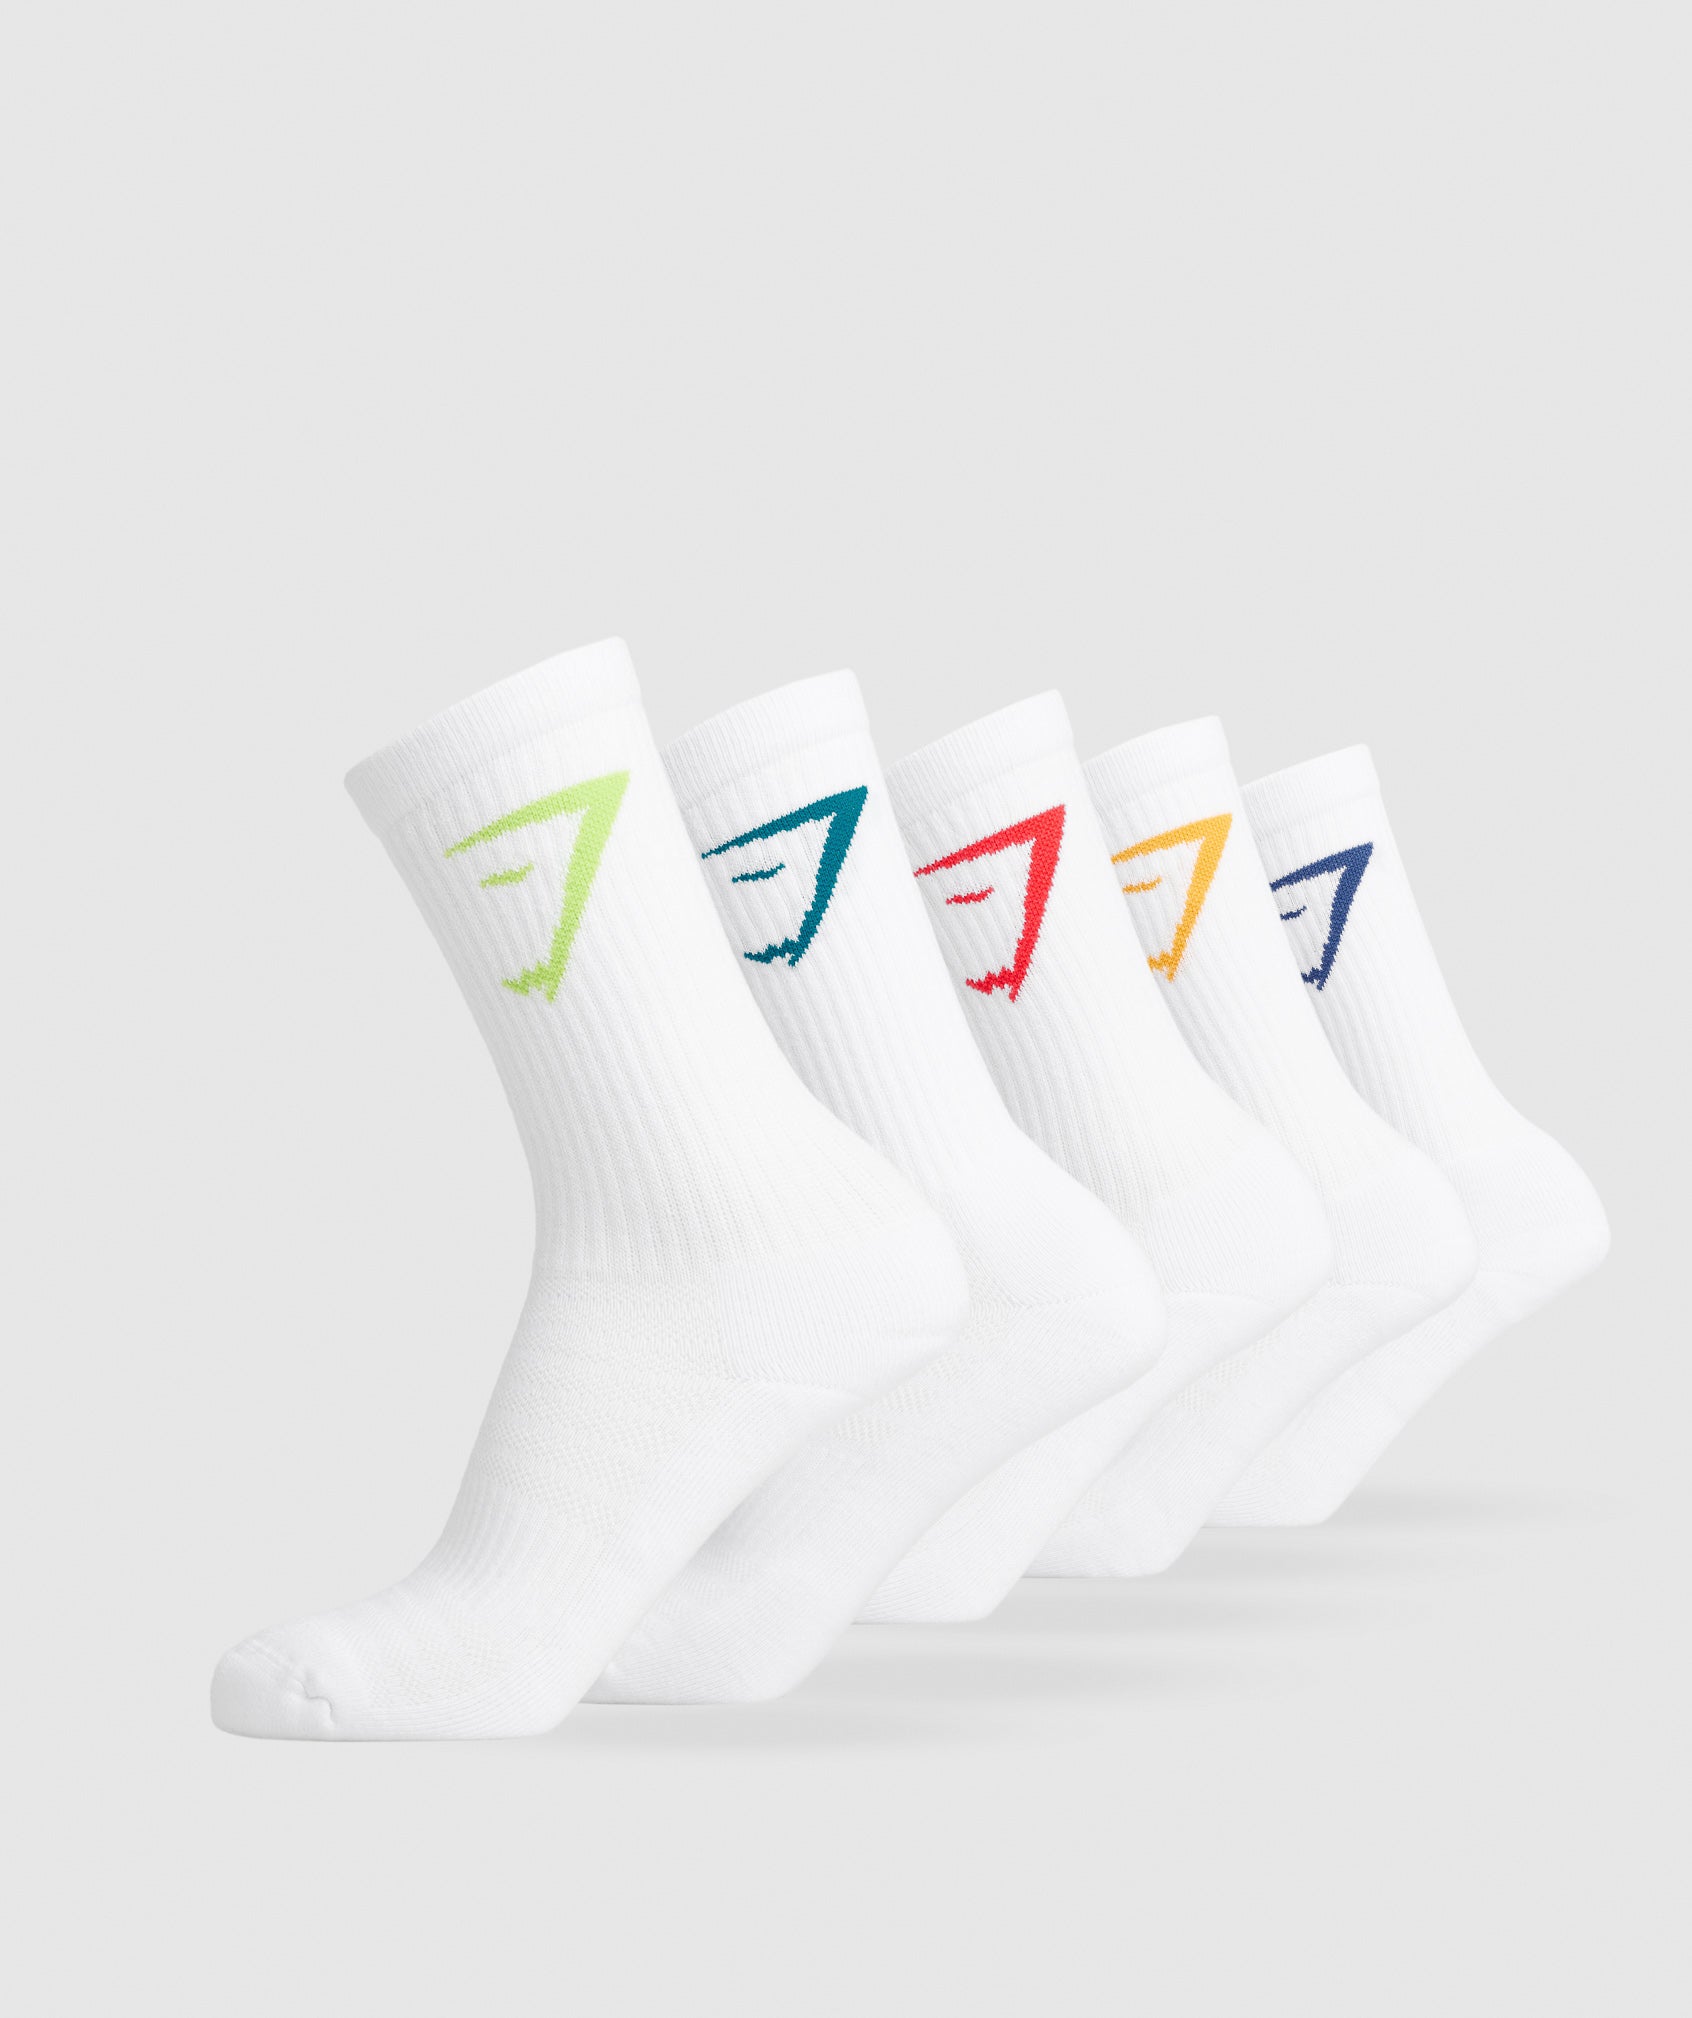 Gymshark Crew Socks 5pk - Yellow/Blue/Zesty Red/Green/Seafoam Blue